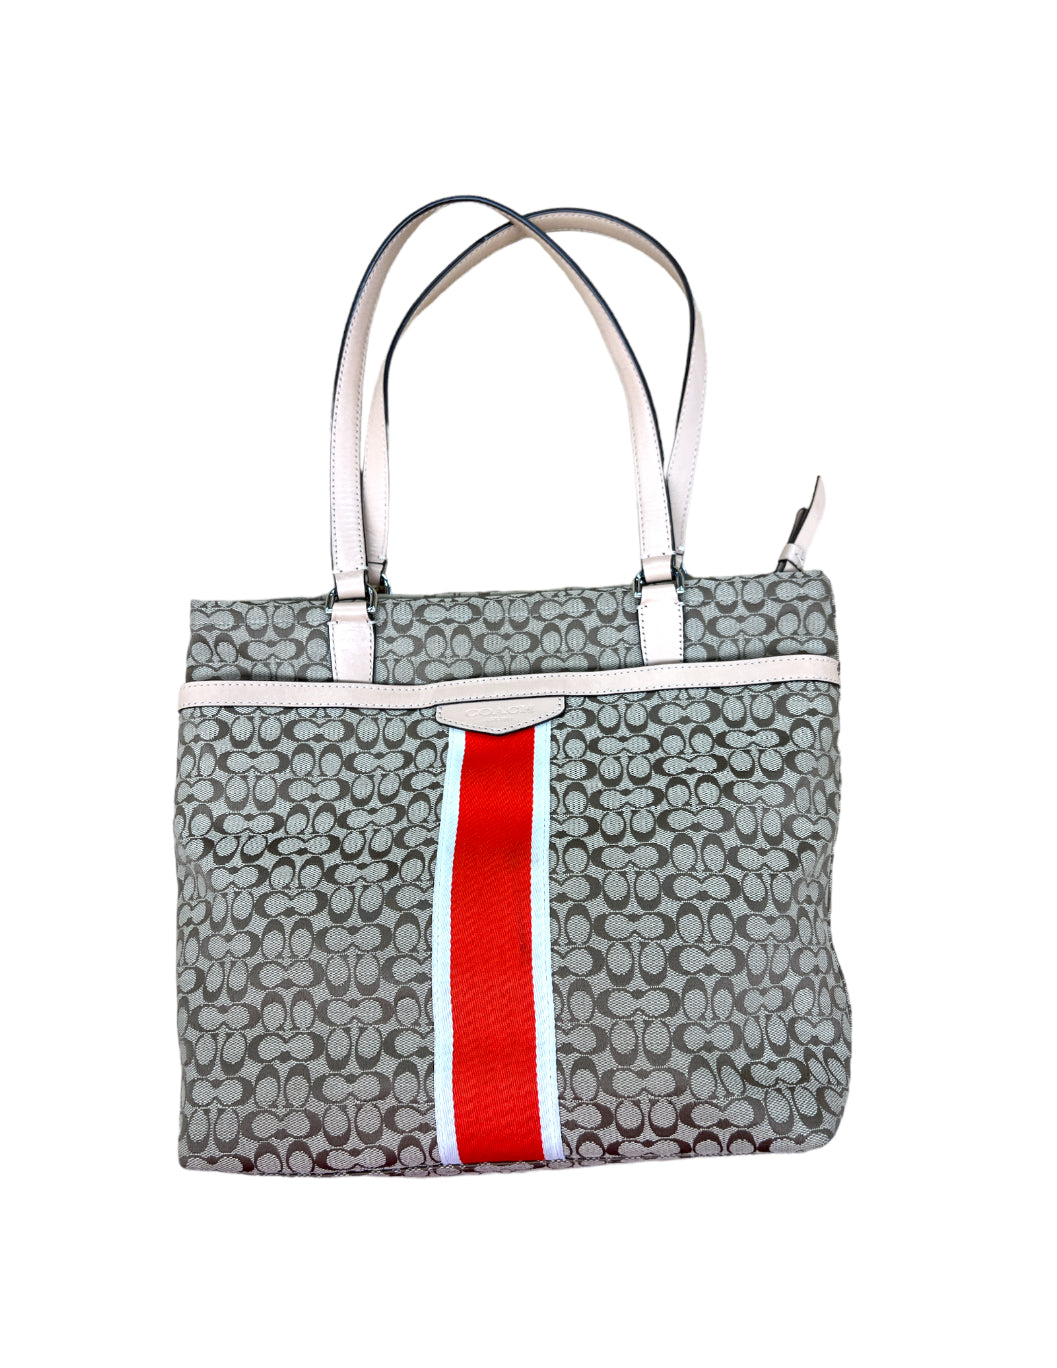 Handbag By Coach  Size: Medium